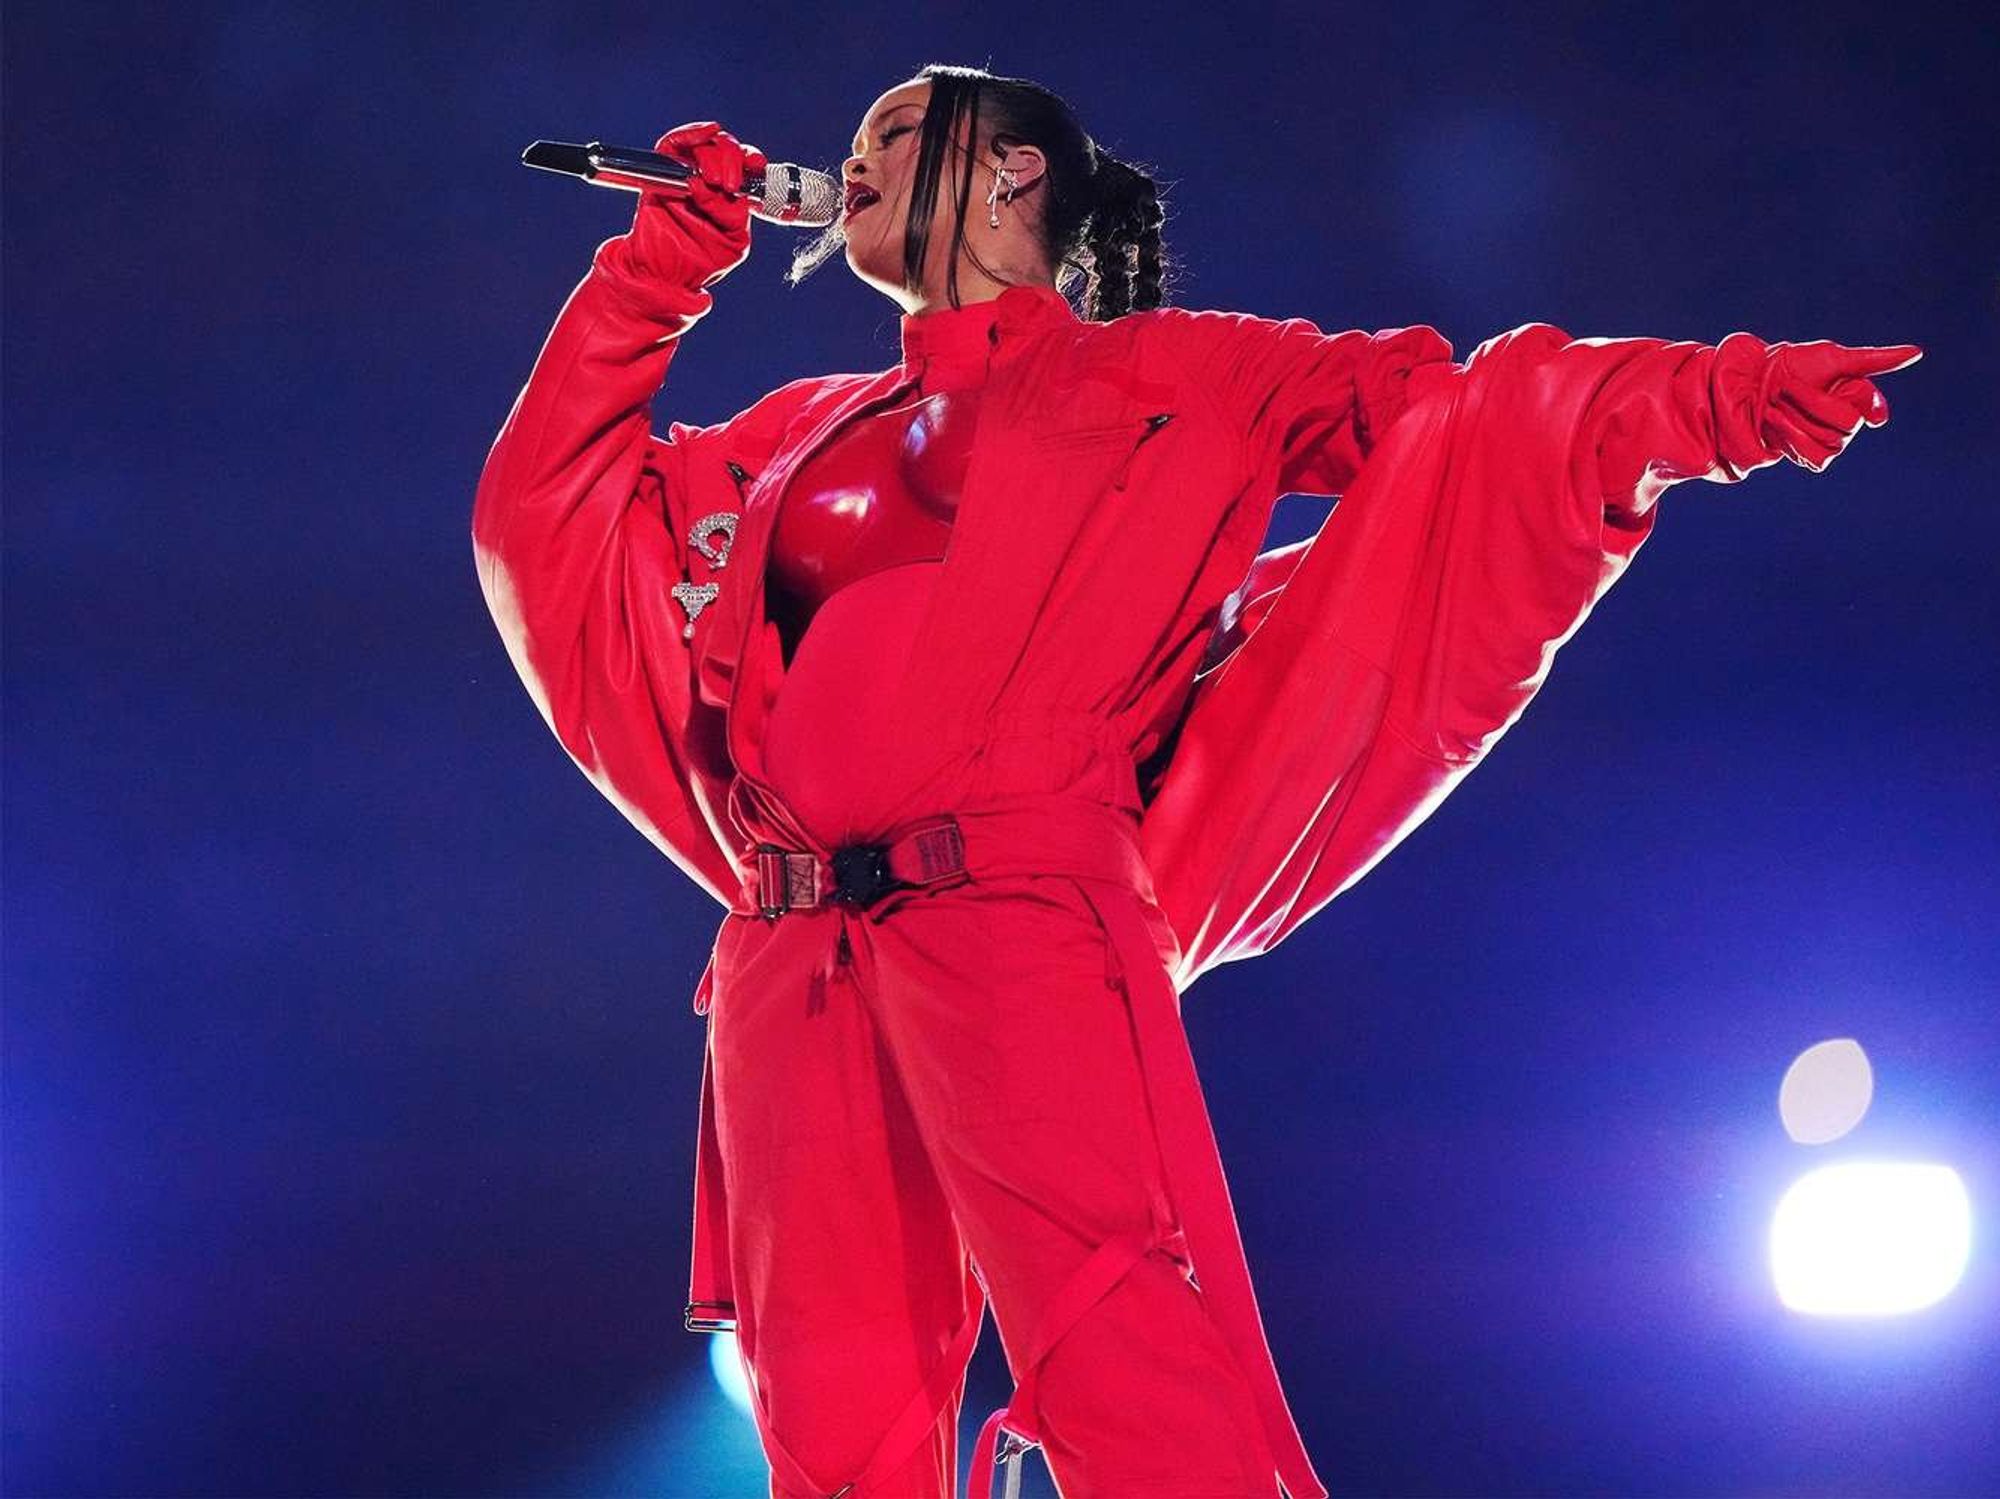 Rihanna performing during the Super Bowl